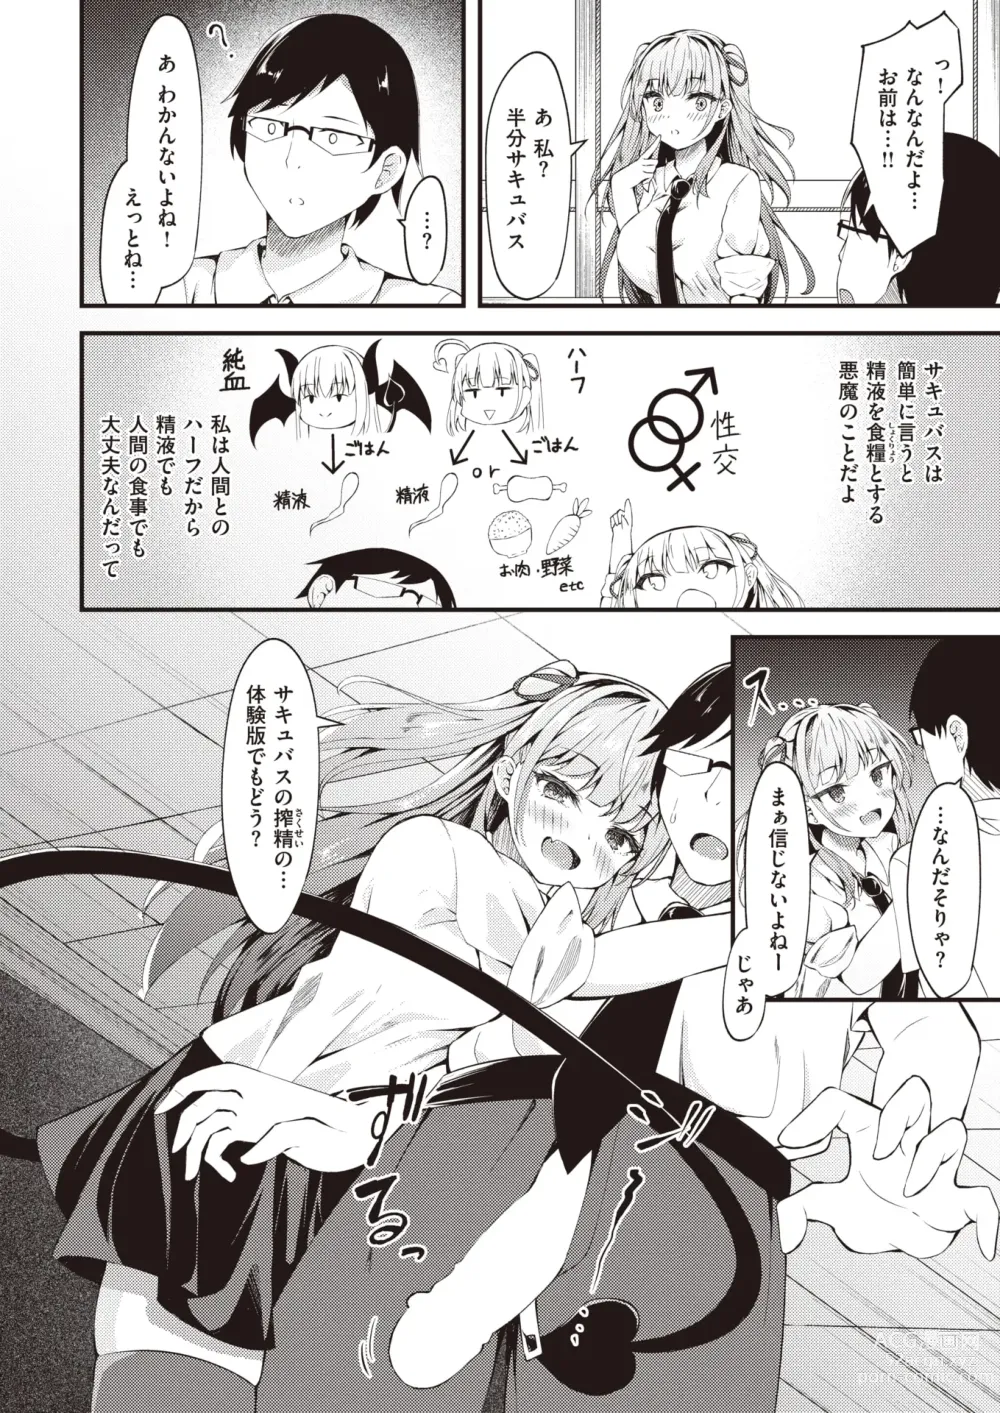 Page 6 of doujinshi 2434065-393712